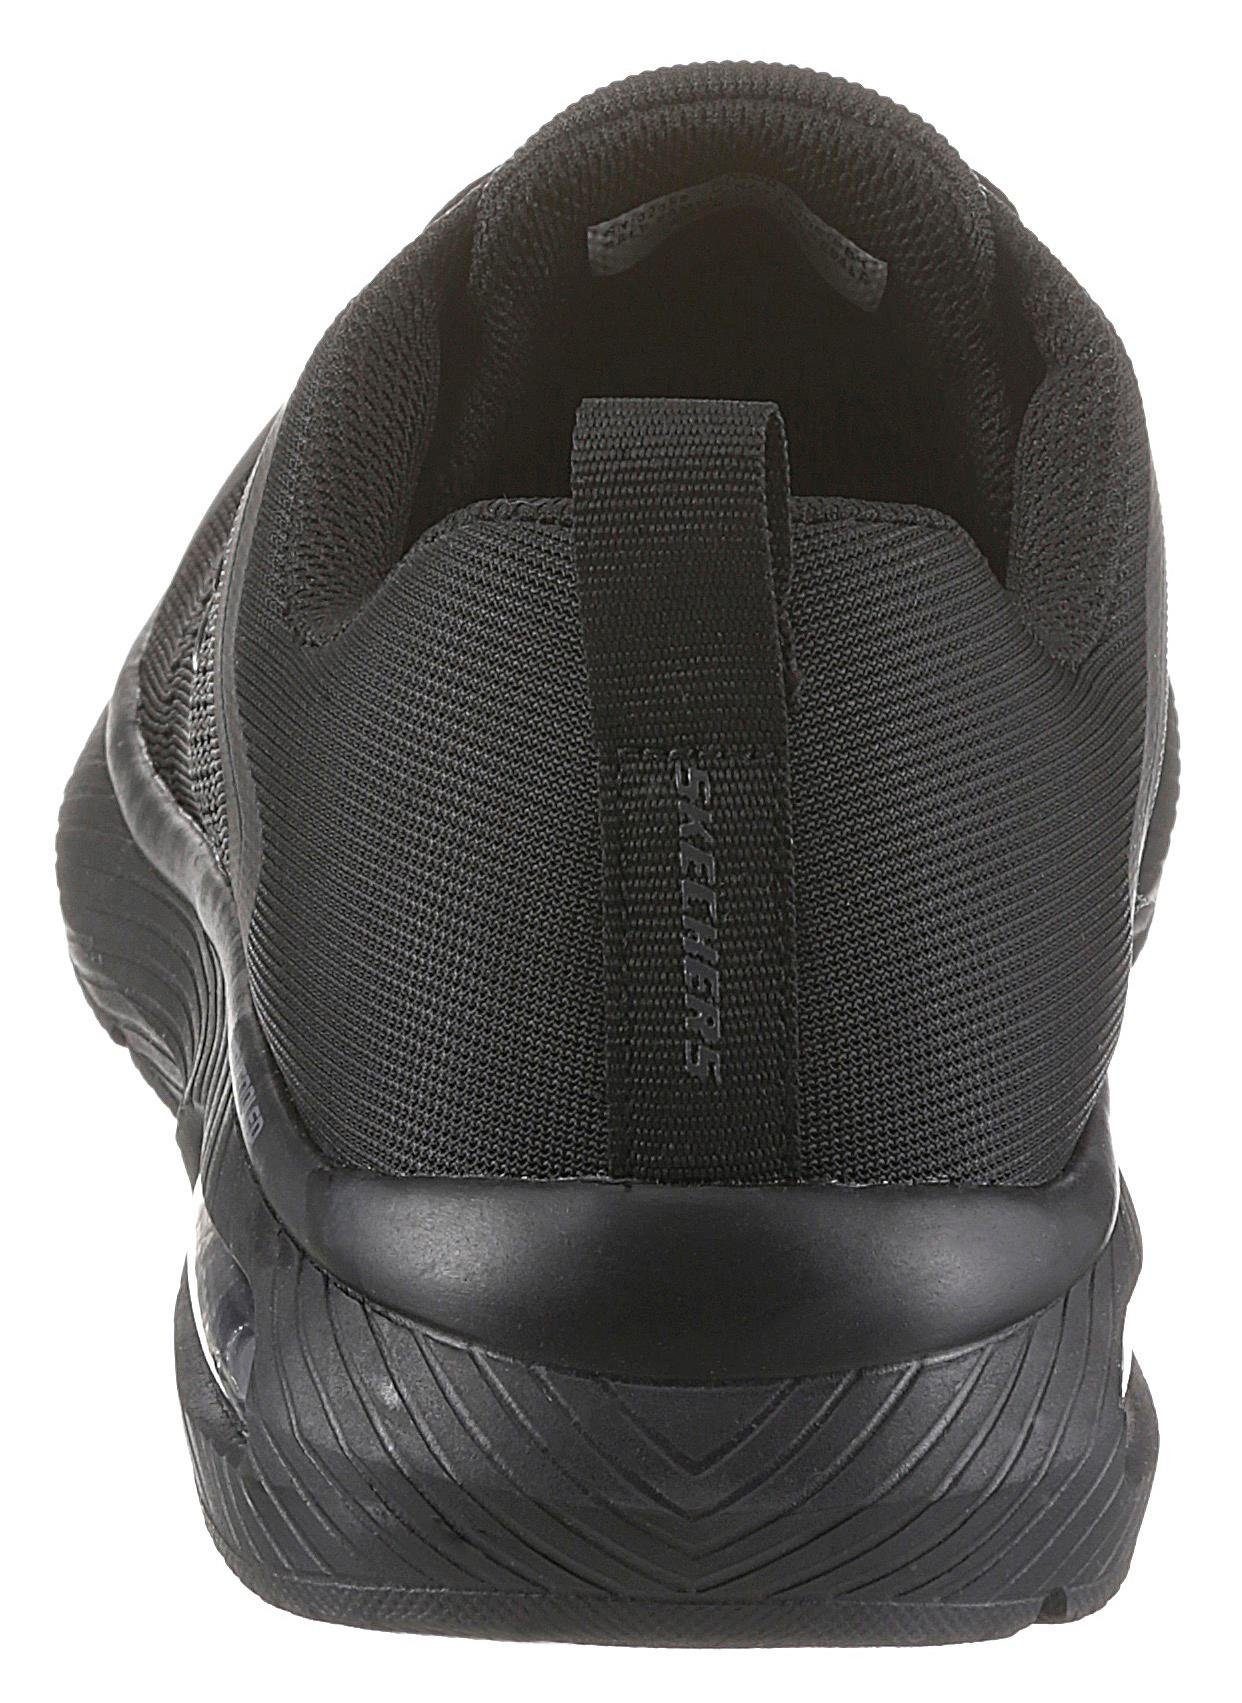 Skechers Dyna Air-Cooled schwarz mit Air Sneaker Memory Foam